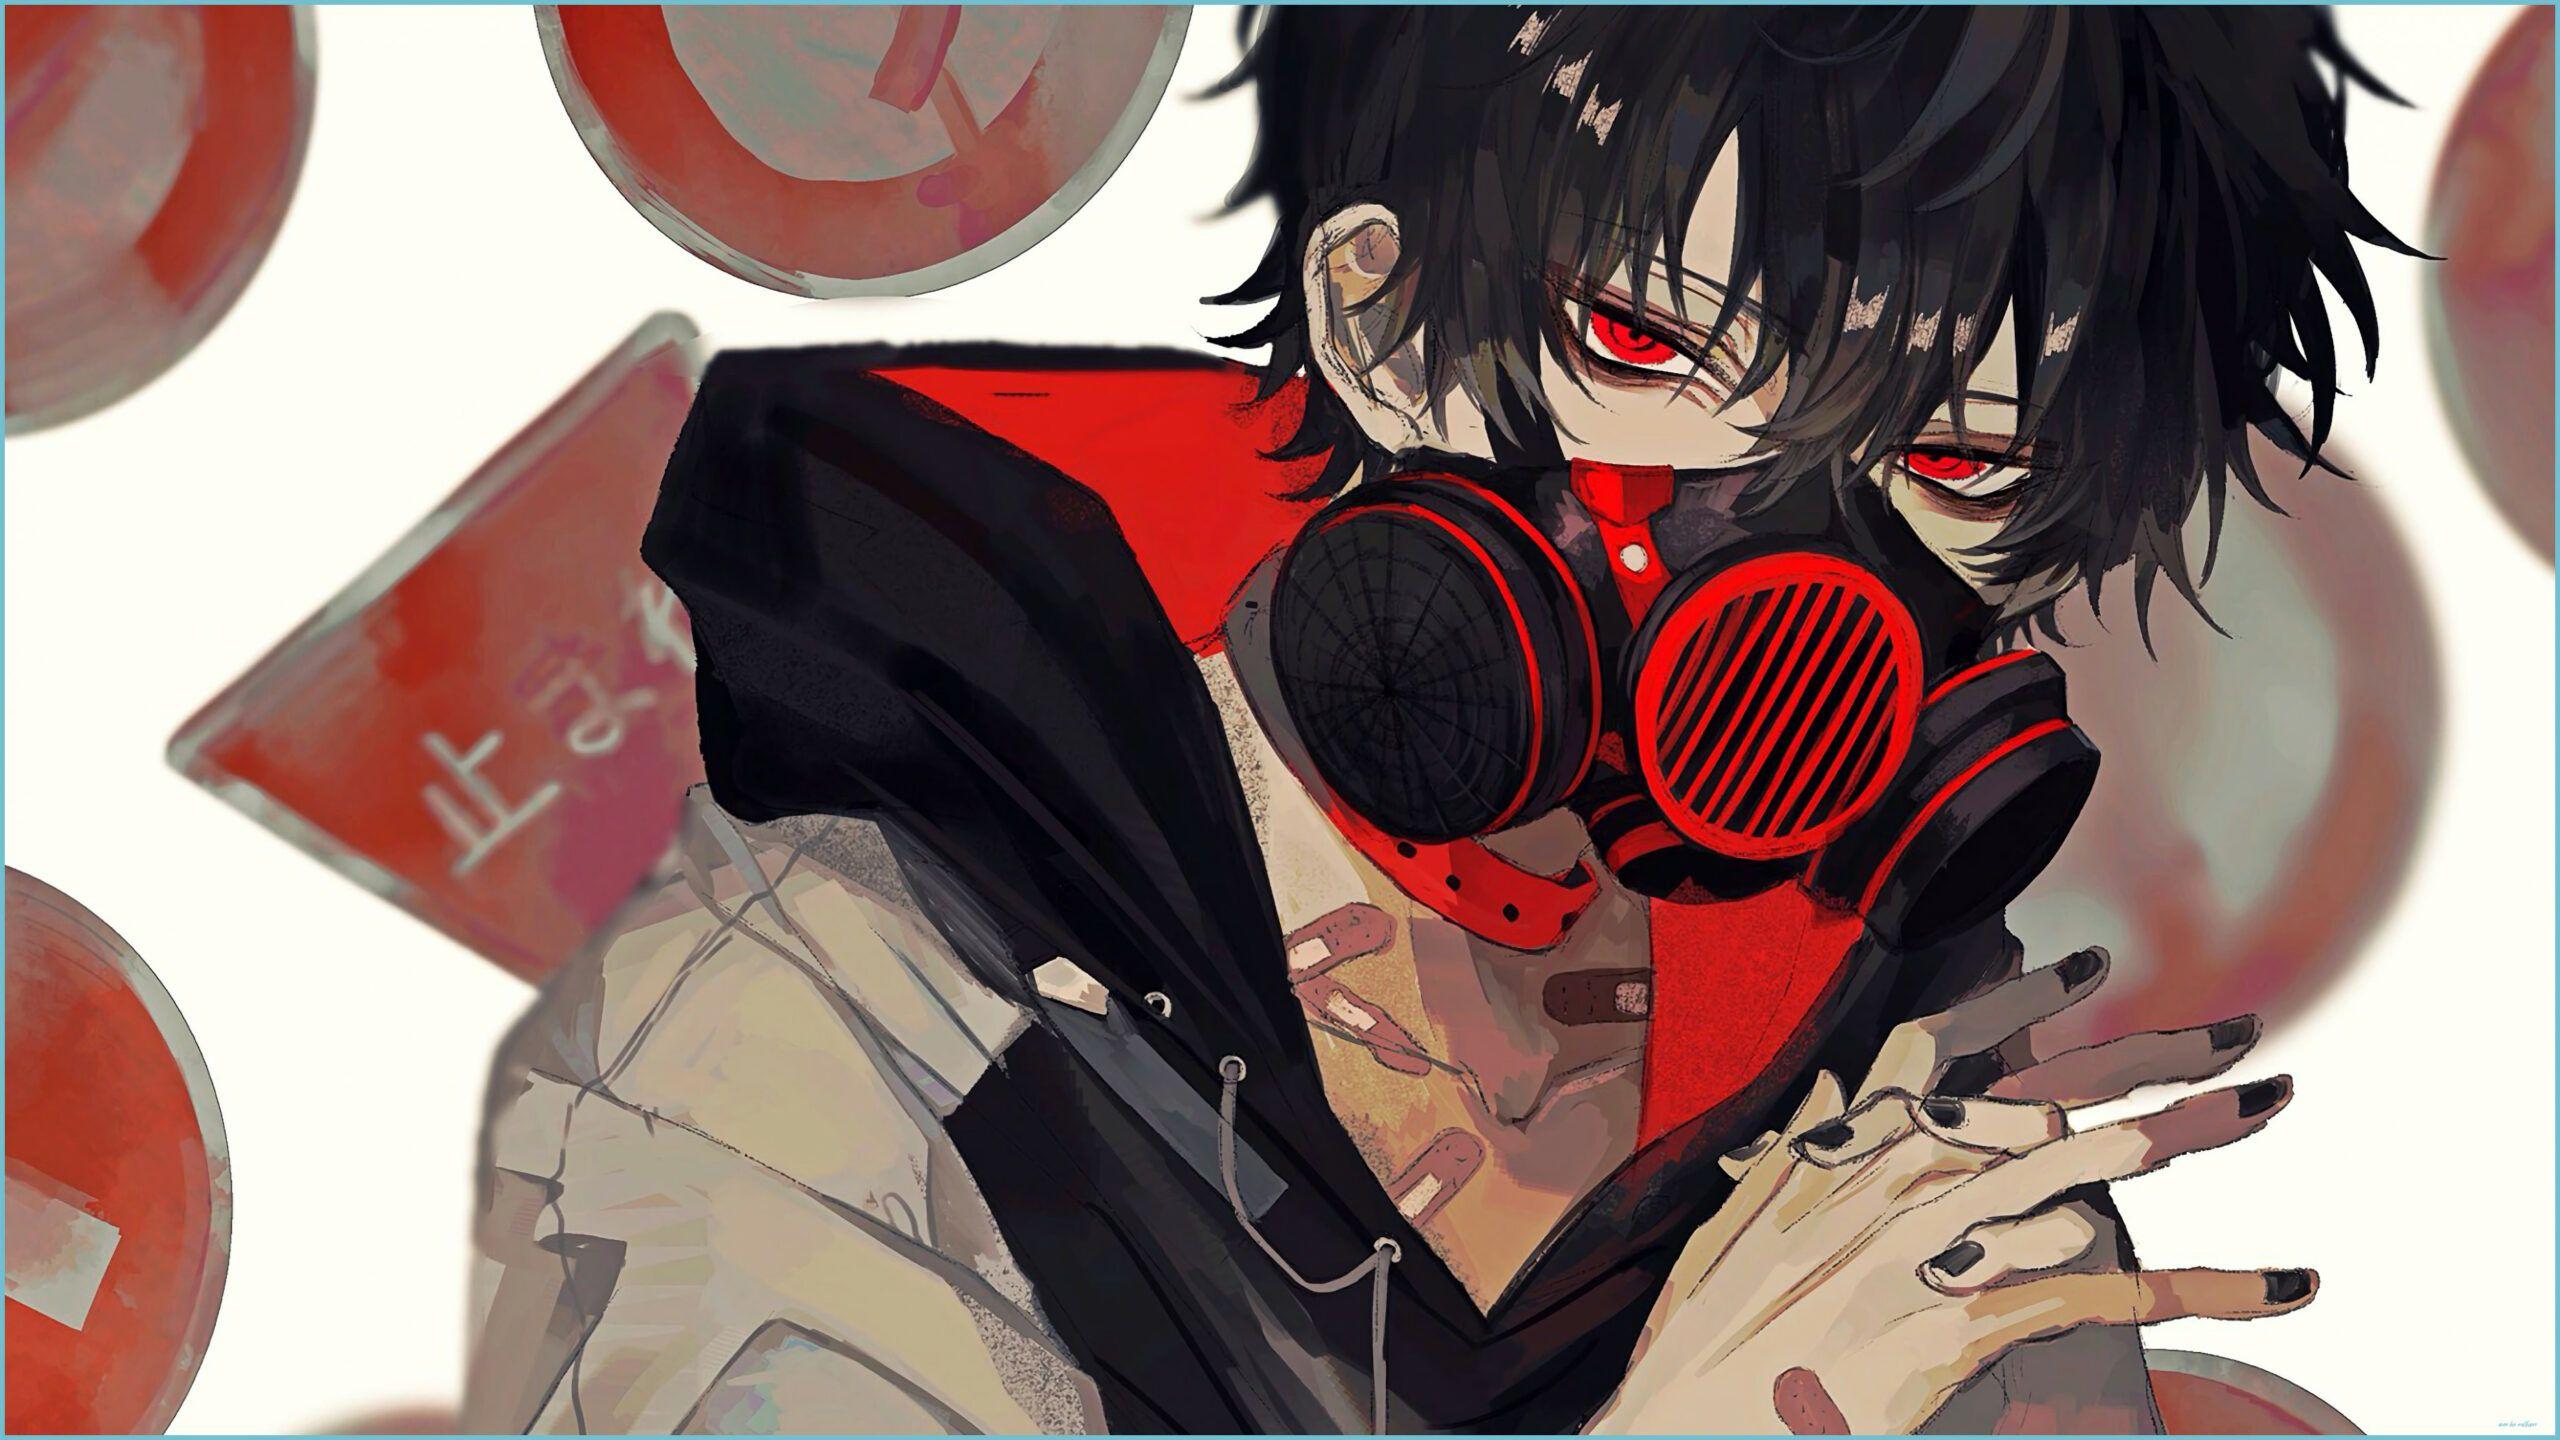 Anime Dark Boy Wallpapers Top Free Anime Dark Boy Backgrounds Wallpaperaccess 9328